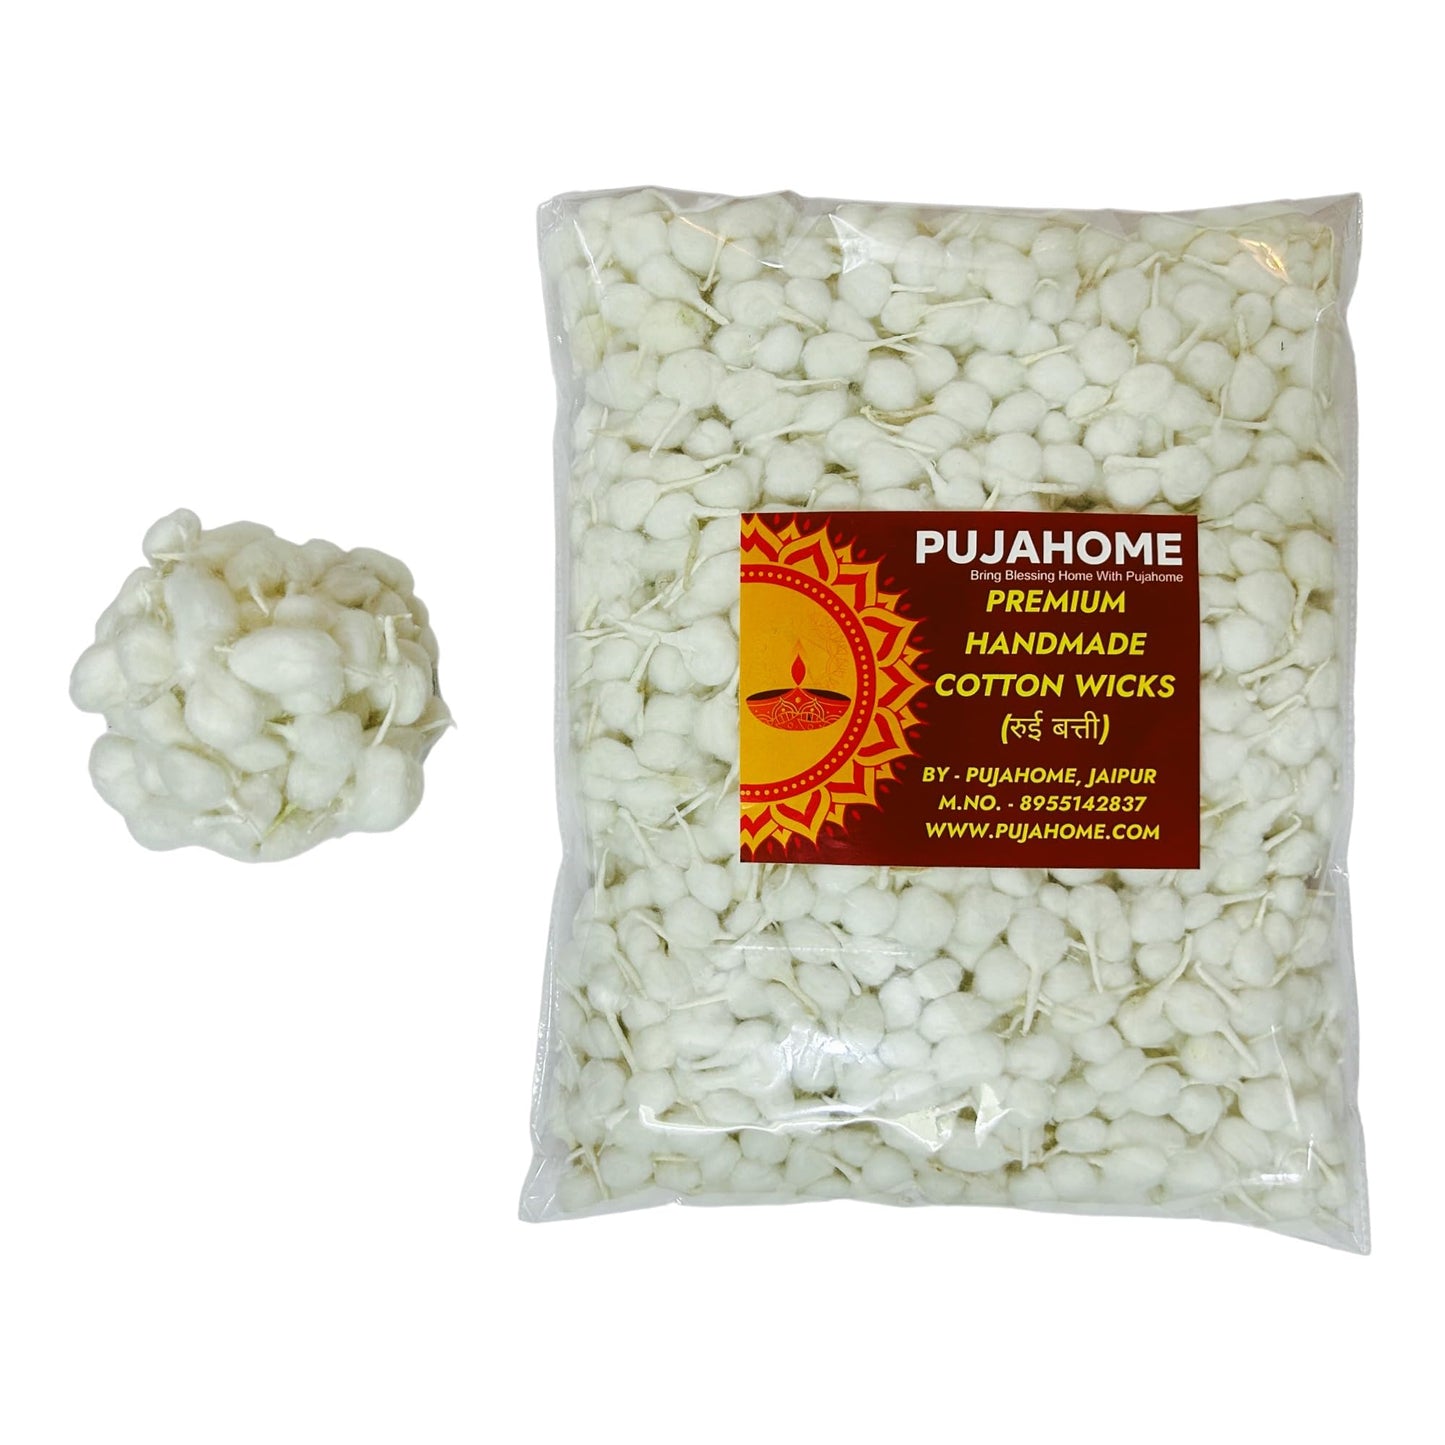 Pujahome Premium Round Cotton Wicks (GOL Batti) for Diya - 1500 Pieces, Ideal for Puja & Rituals (White)